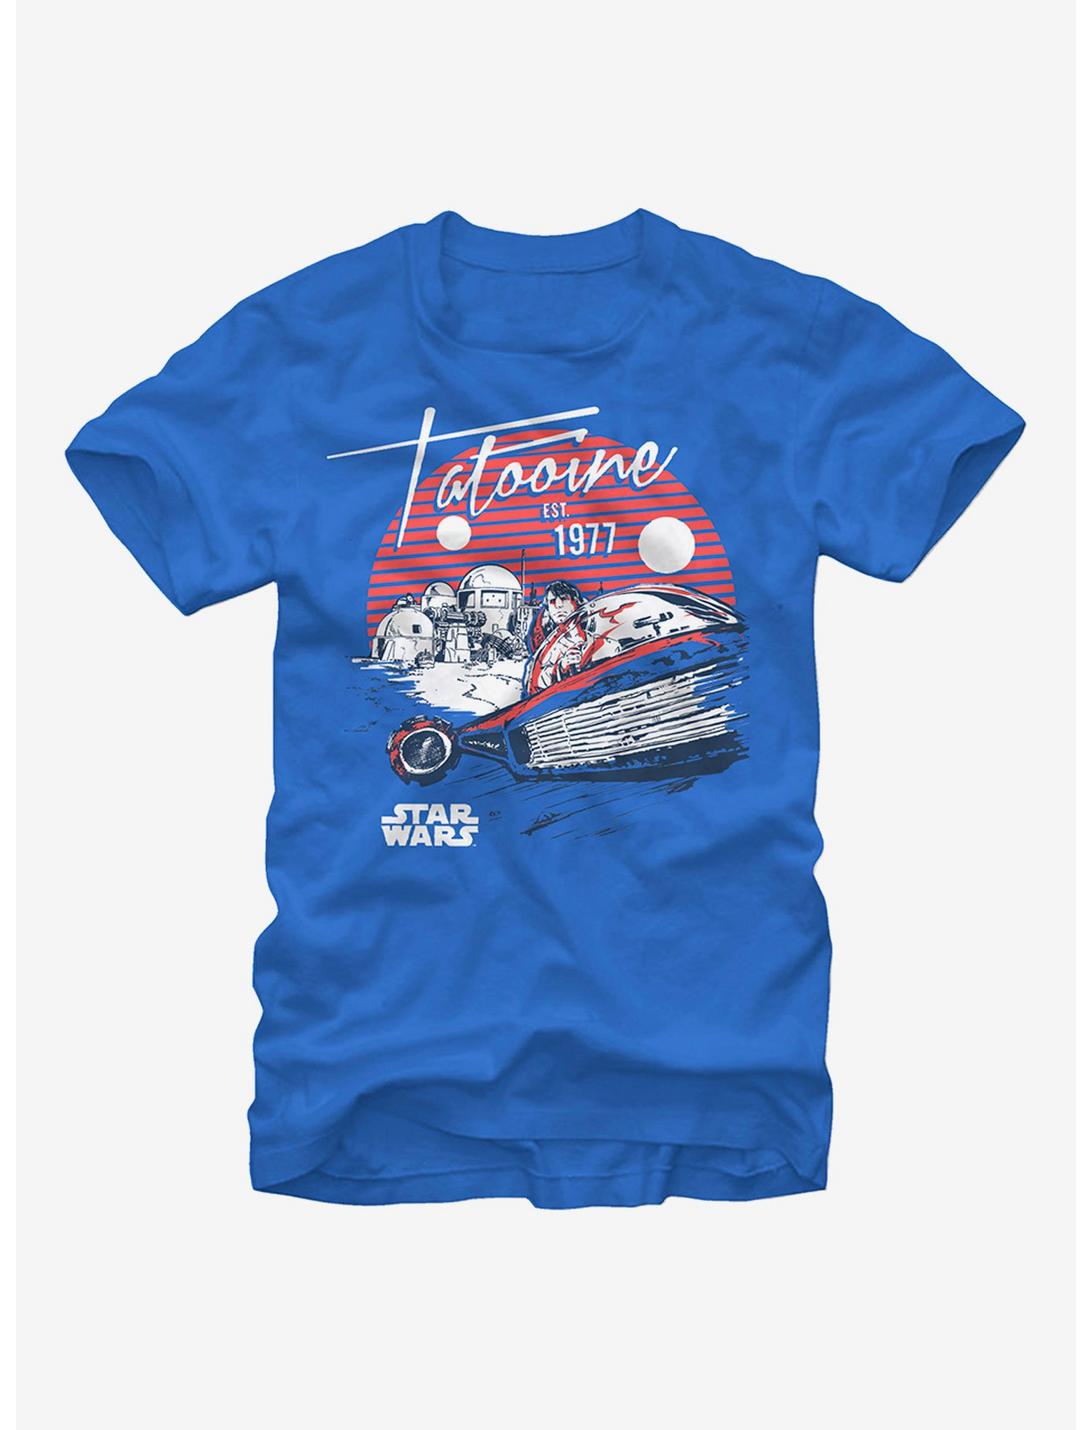 Star Wars Tatooine Est 1977 T-Shirt, ROYAL, hi-res